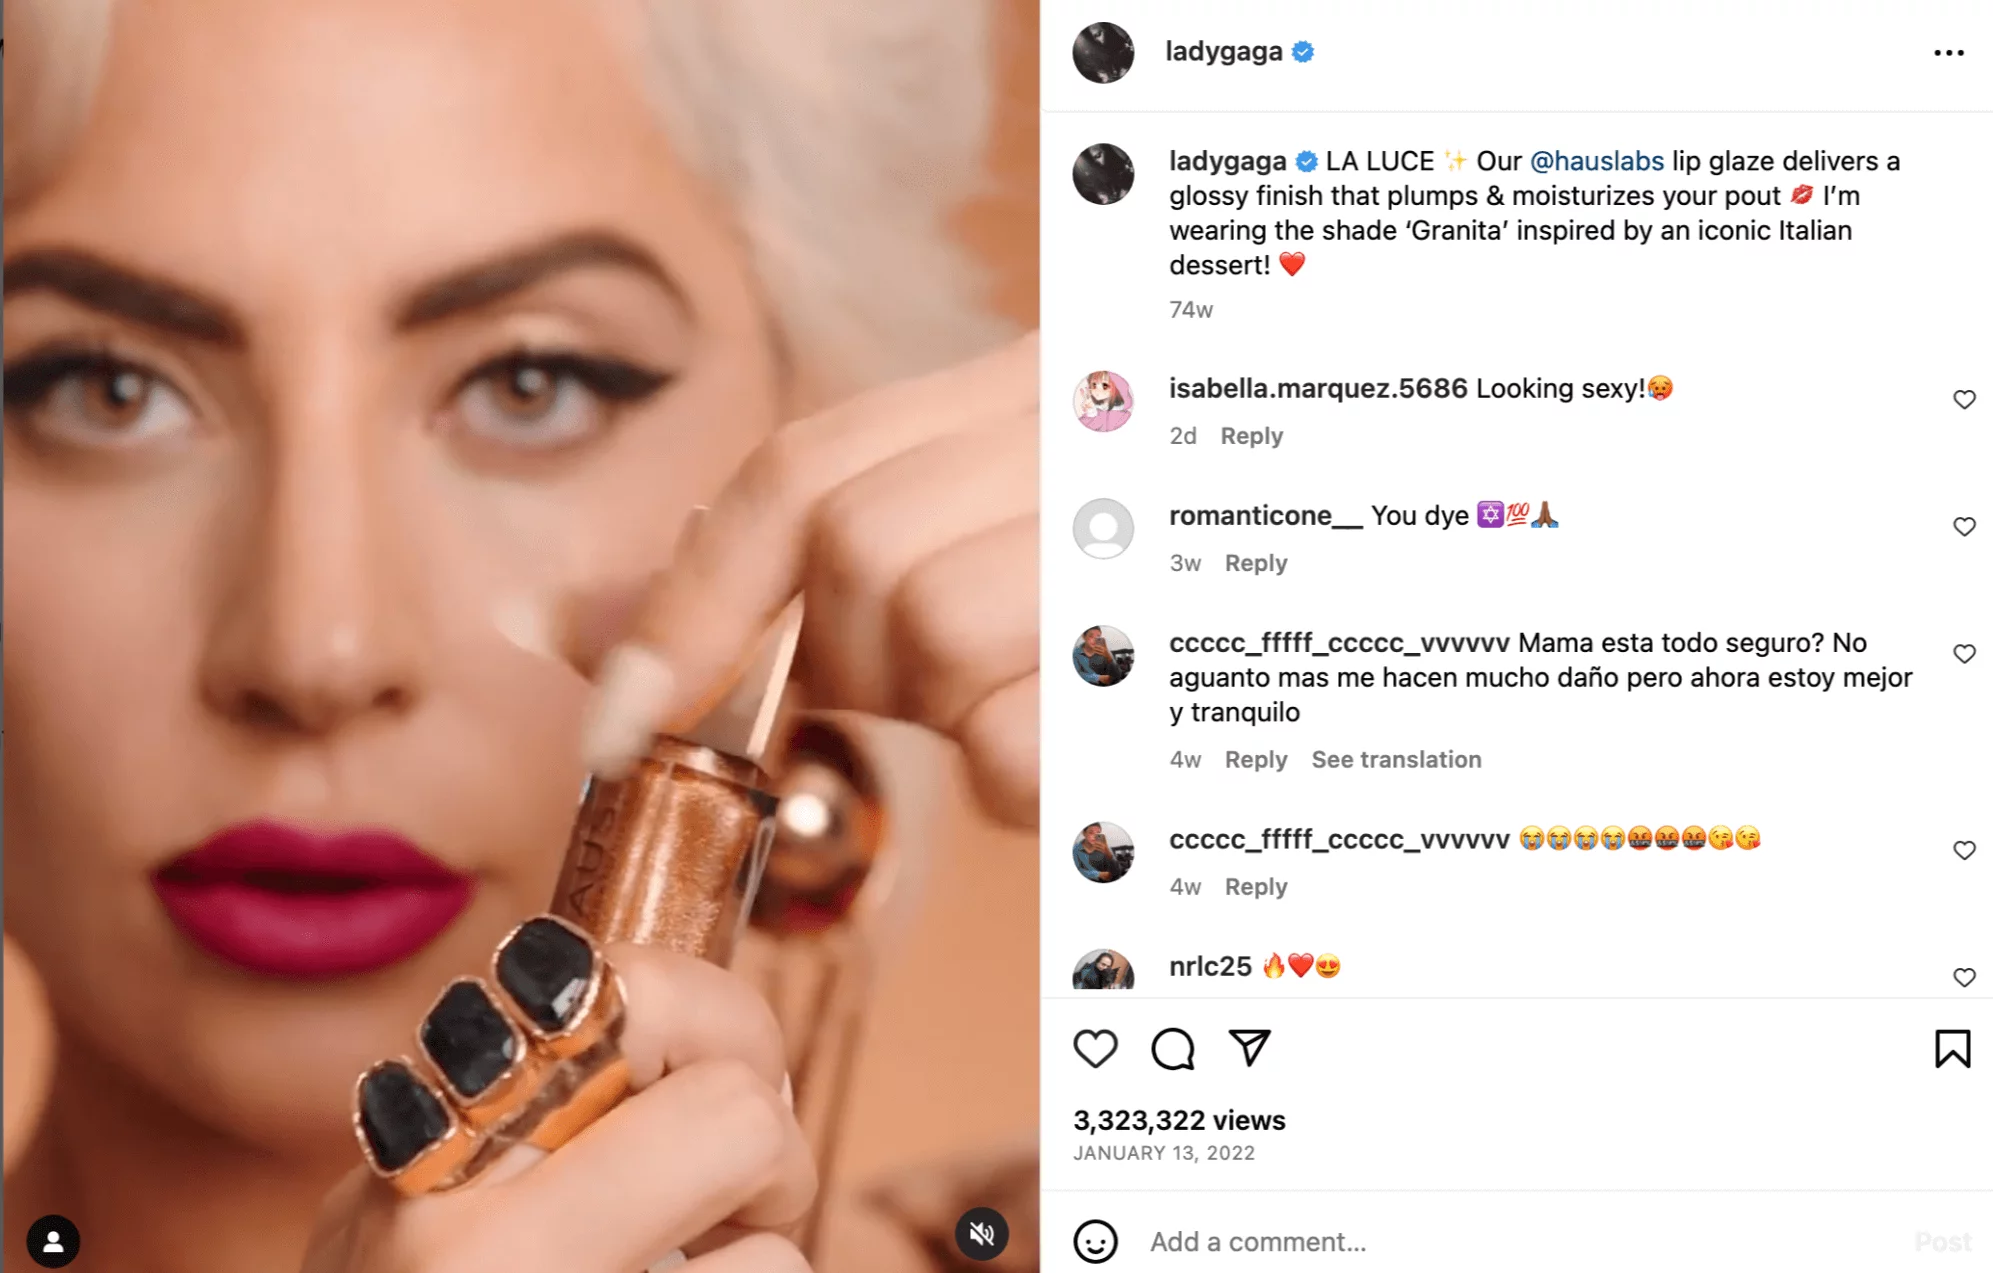 Instagram post by Lady Gaga showcasing Haus Labs' lip glaze product.